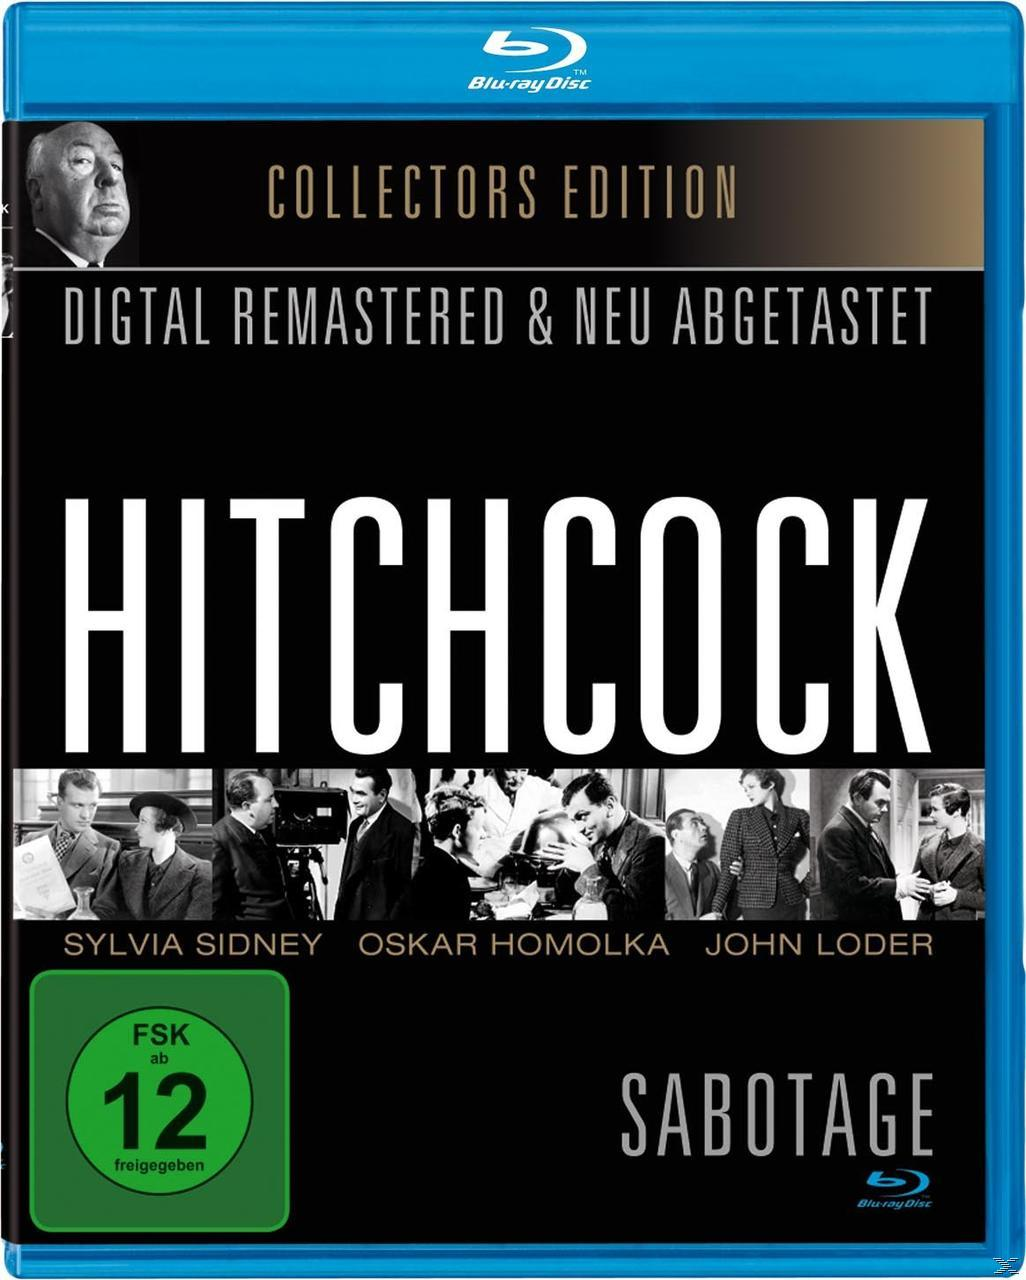 Sabotage Hitchcock: Alfred Blu-ray